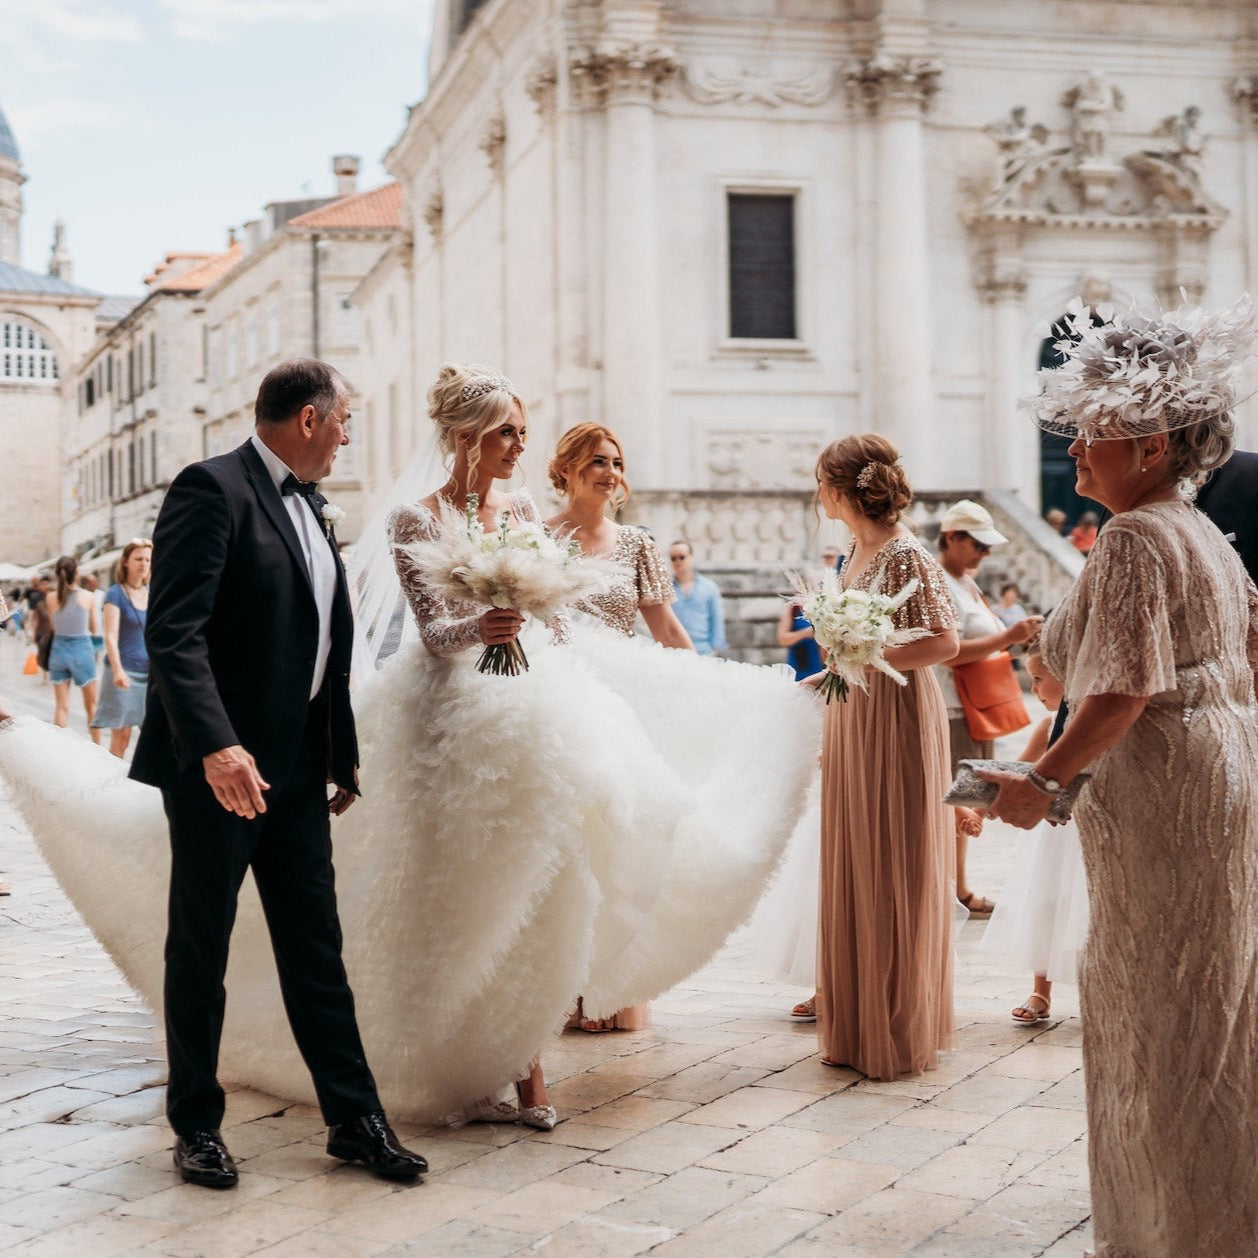 Shoot a wedding with us | Marbella, Spain - Photo & Cinema